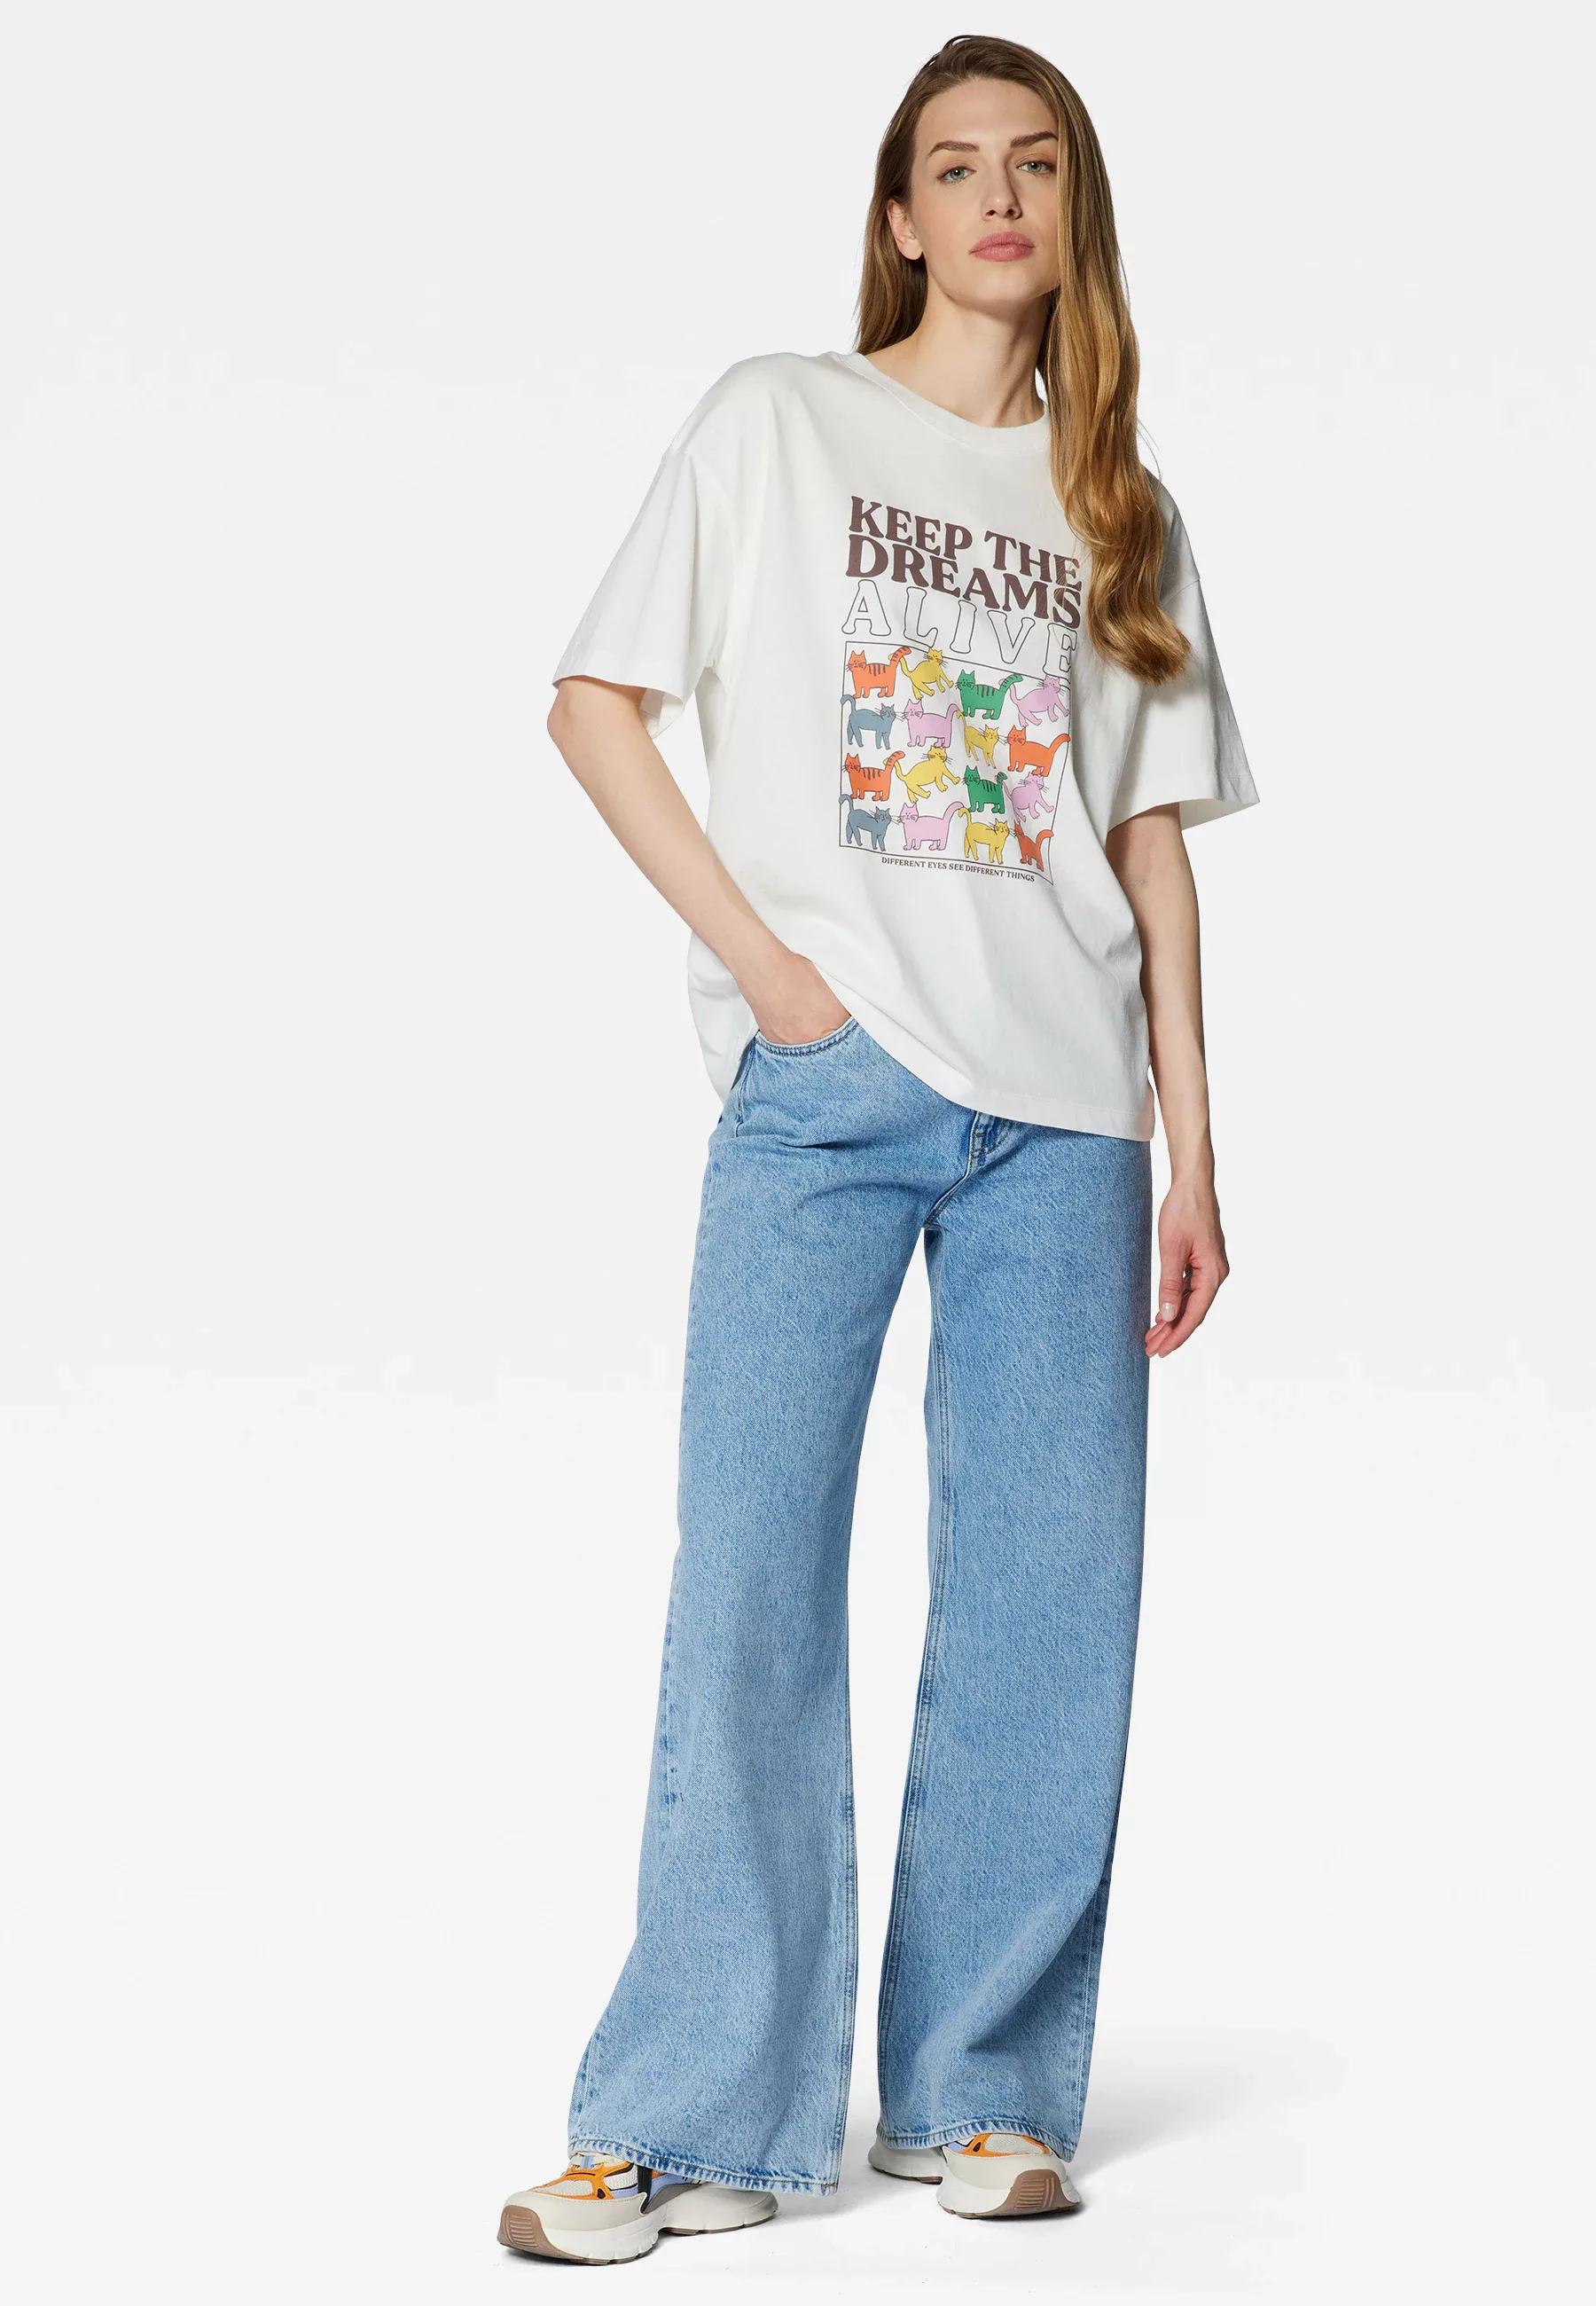 Mavi Rundhalsshirt "KEEP THE DREAMS PRINTED GRAPHI", Print T-Shirt günstig online kaufen